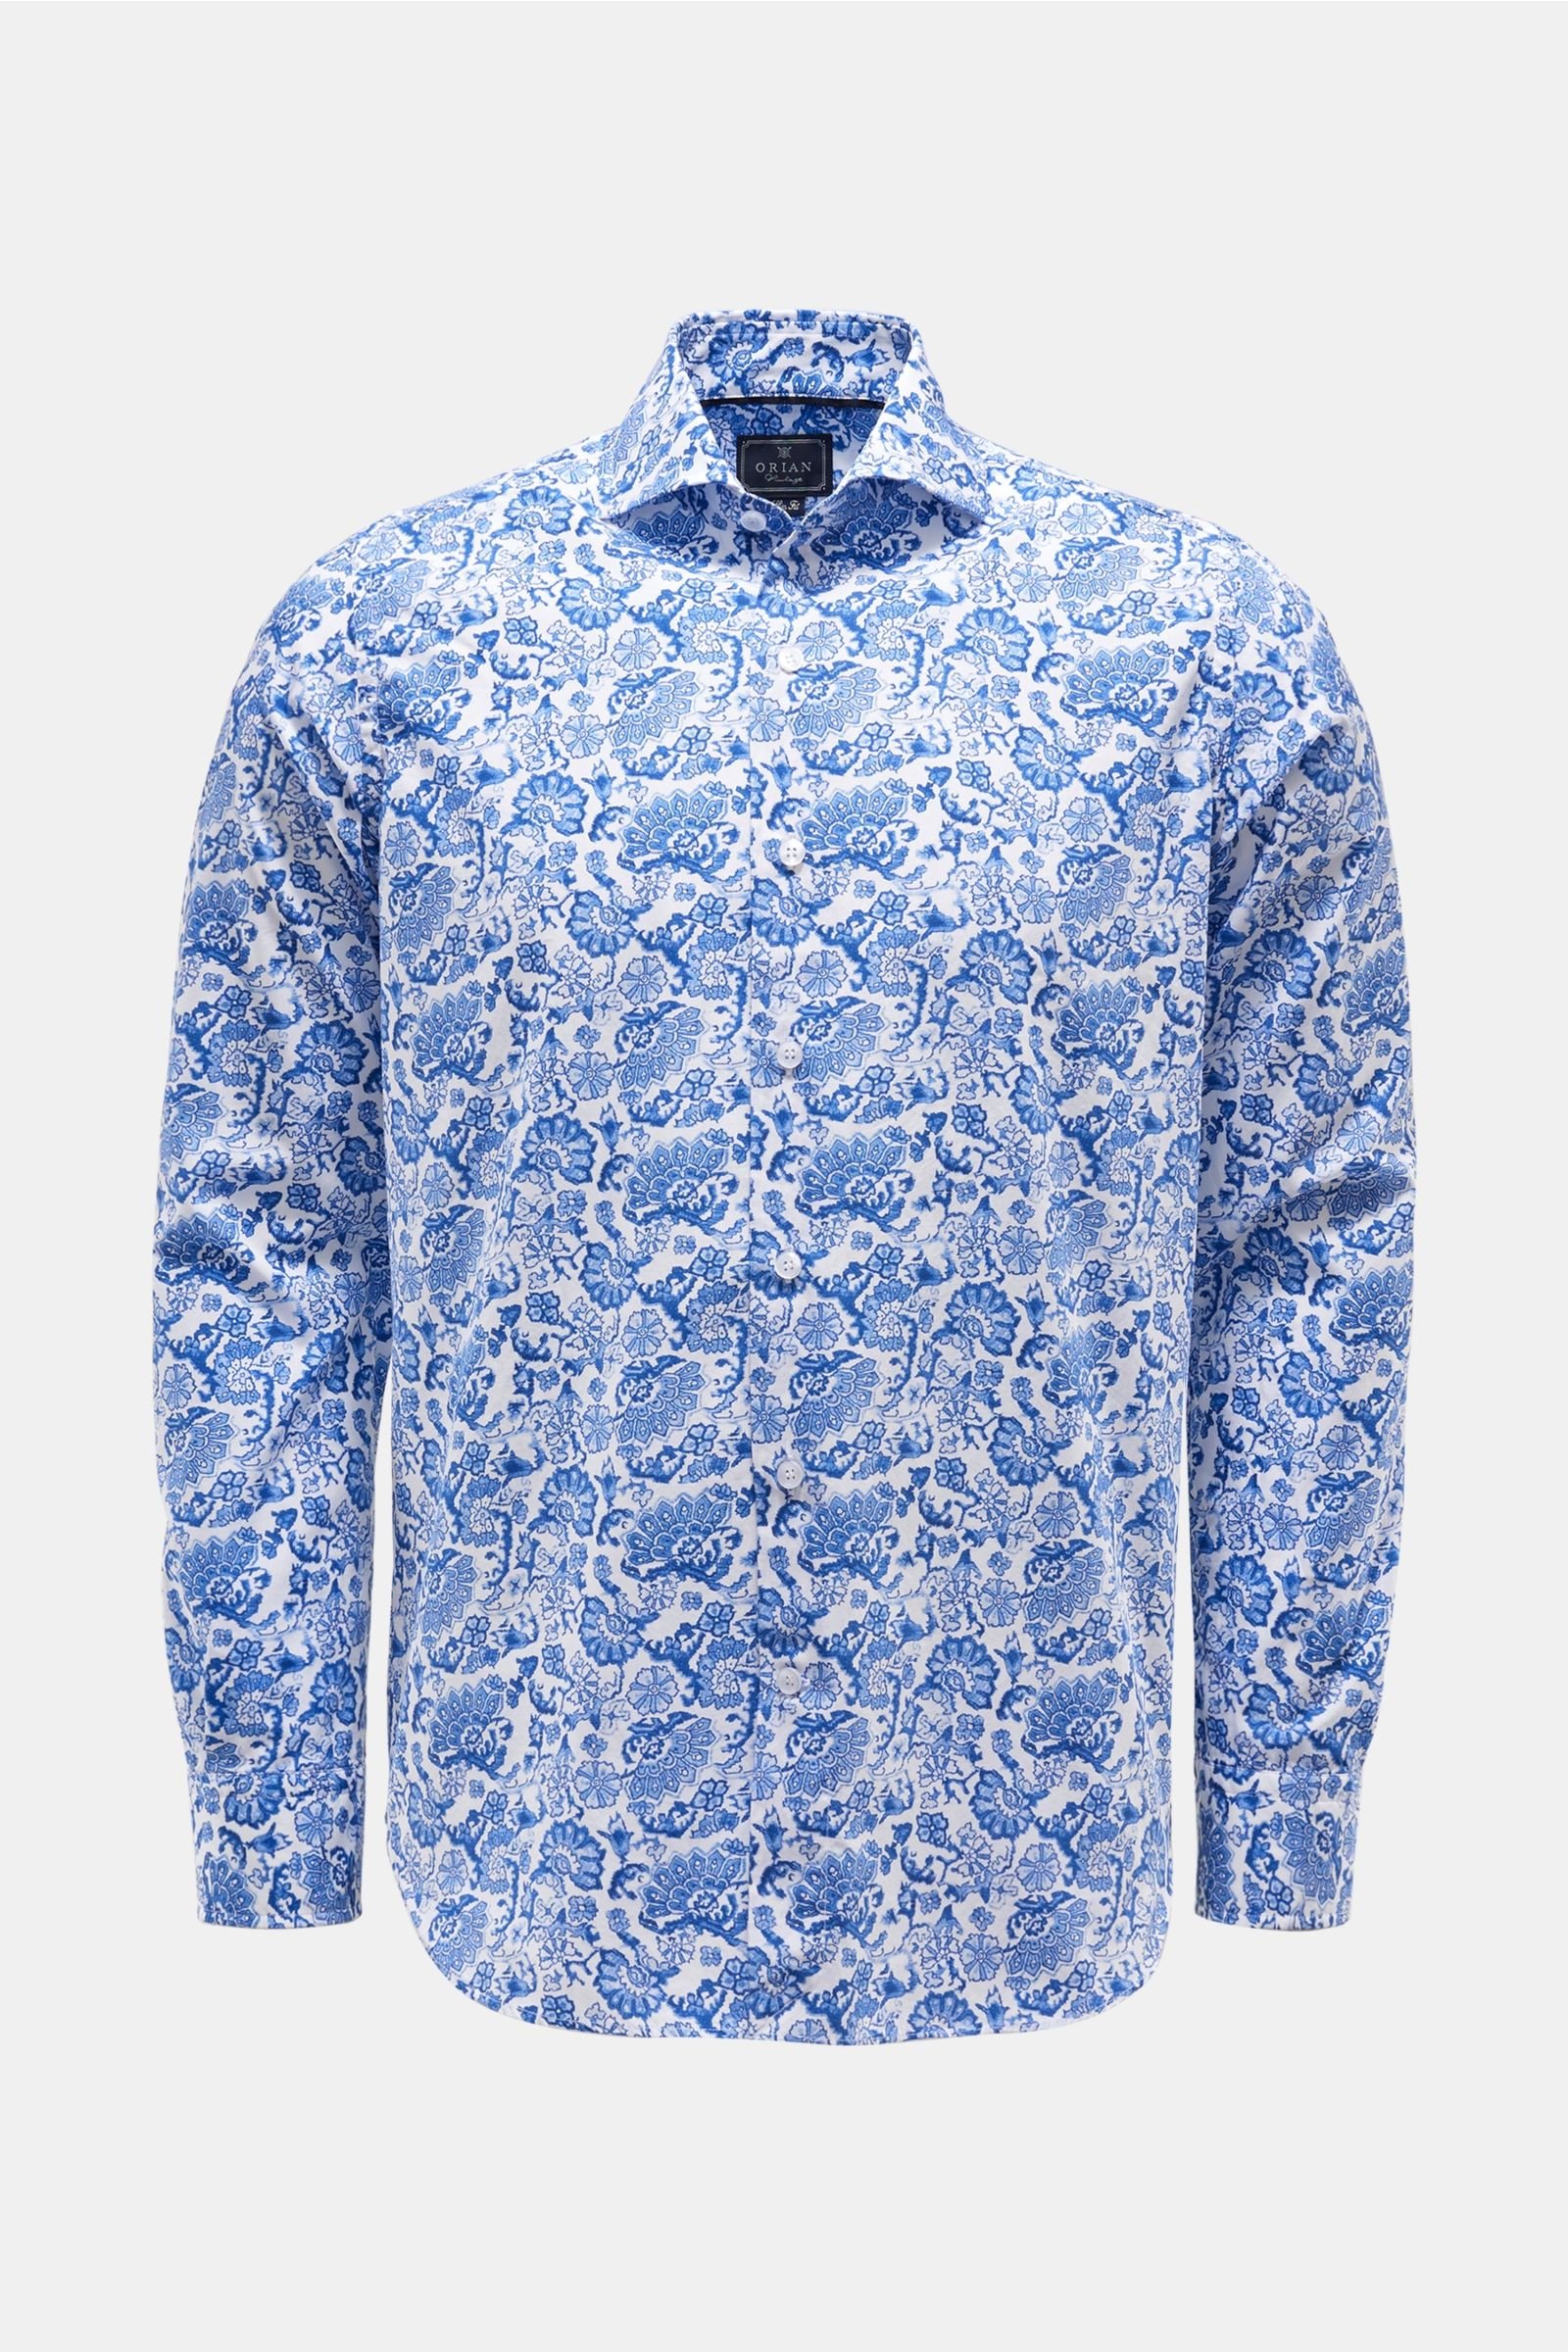 Casual shirt shark collar dark blue/white patterned